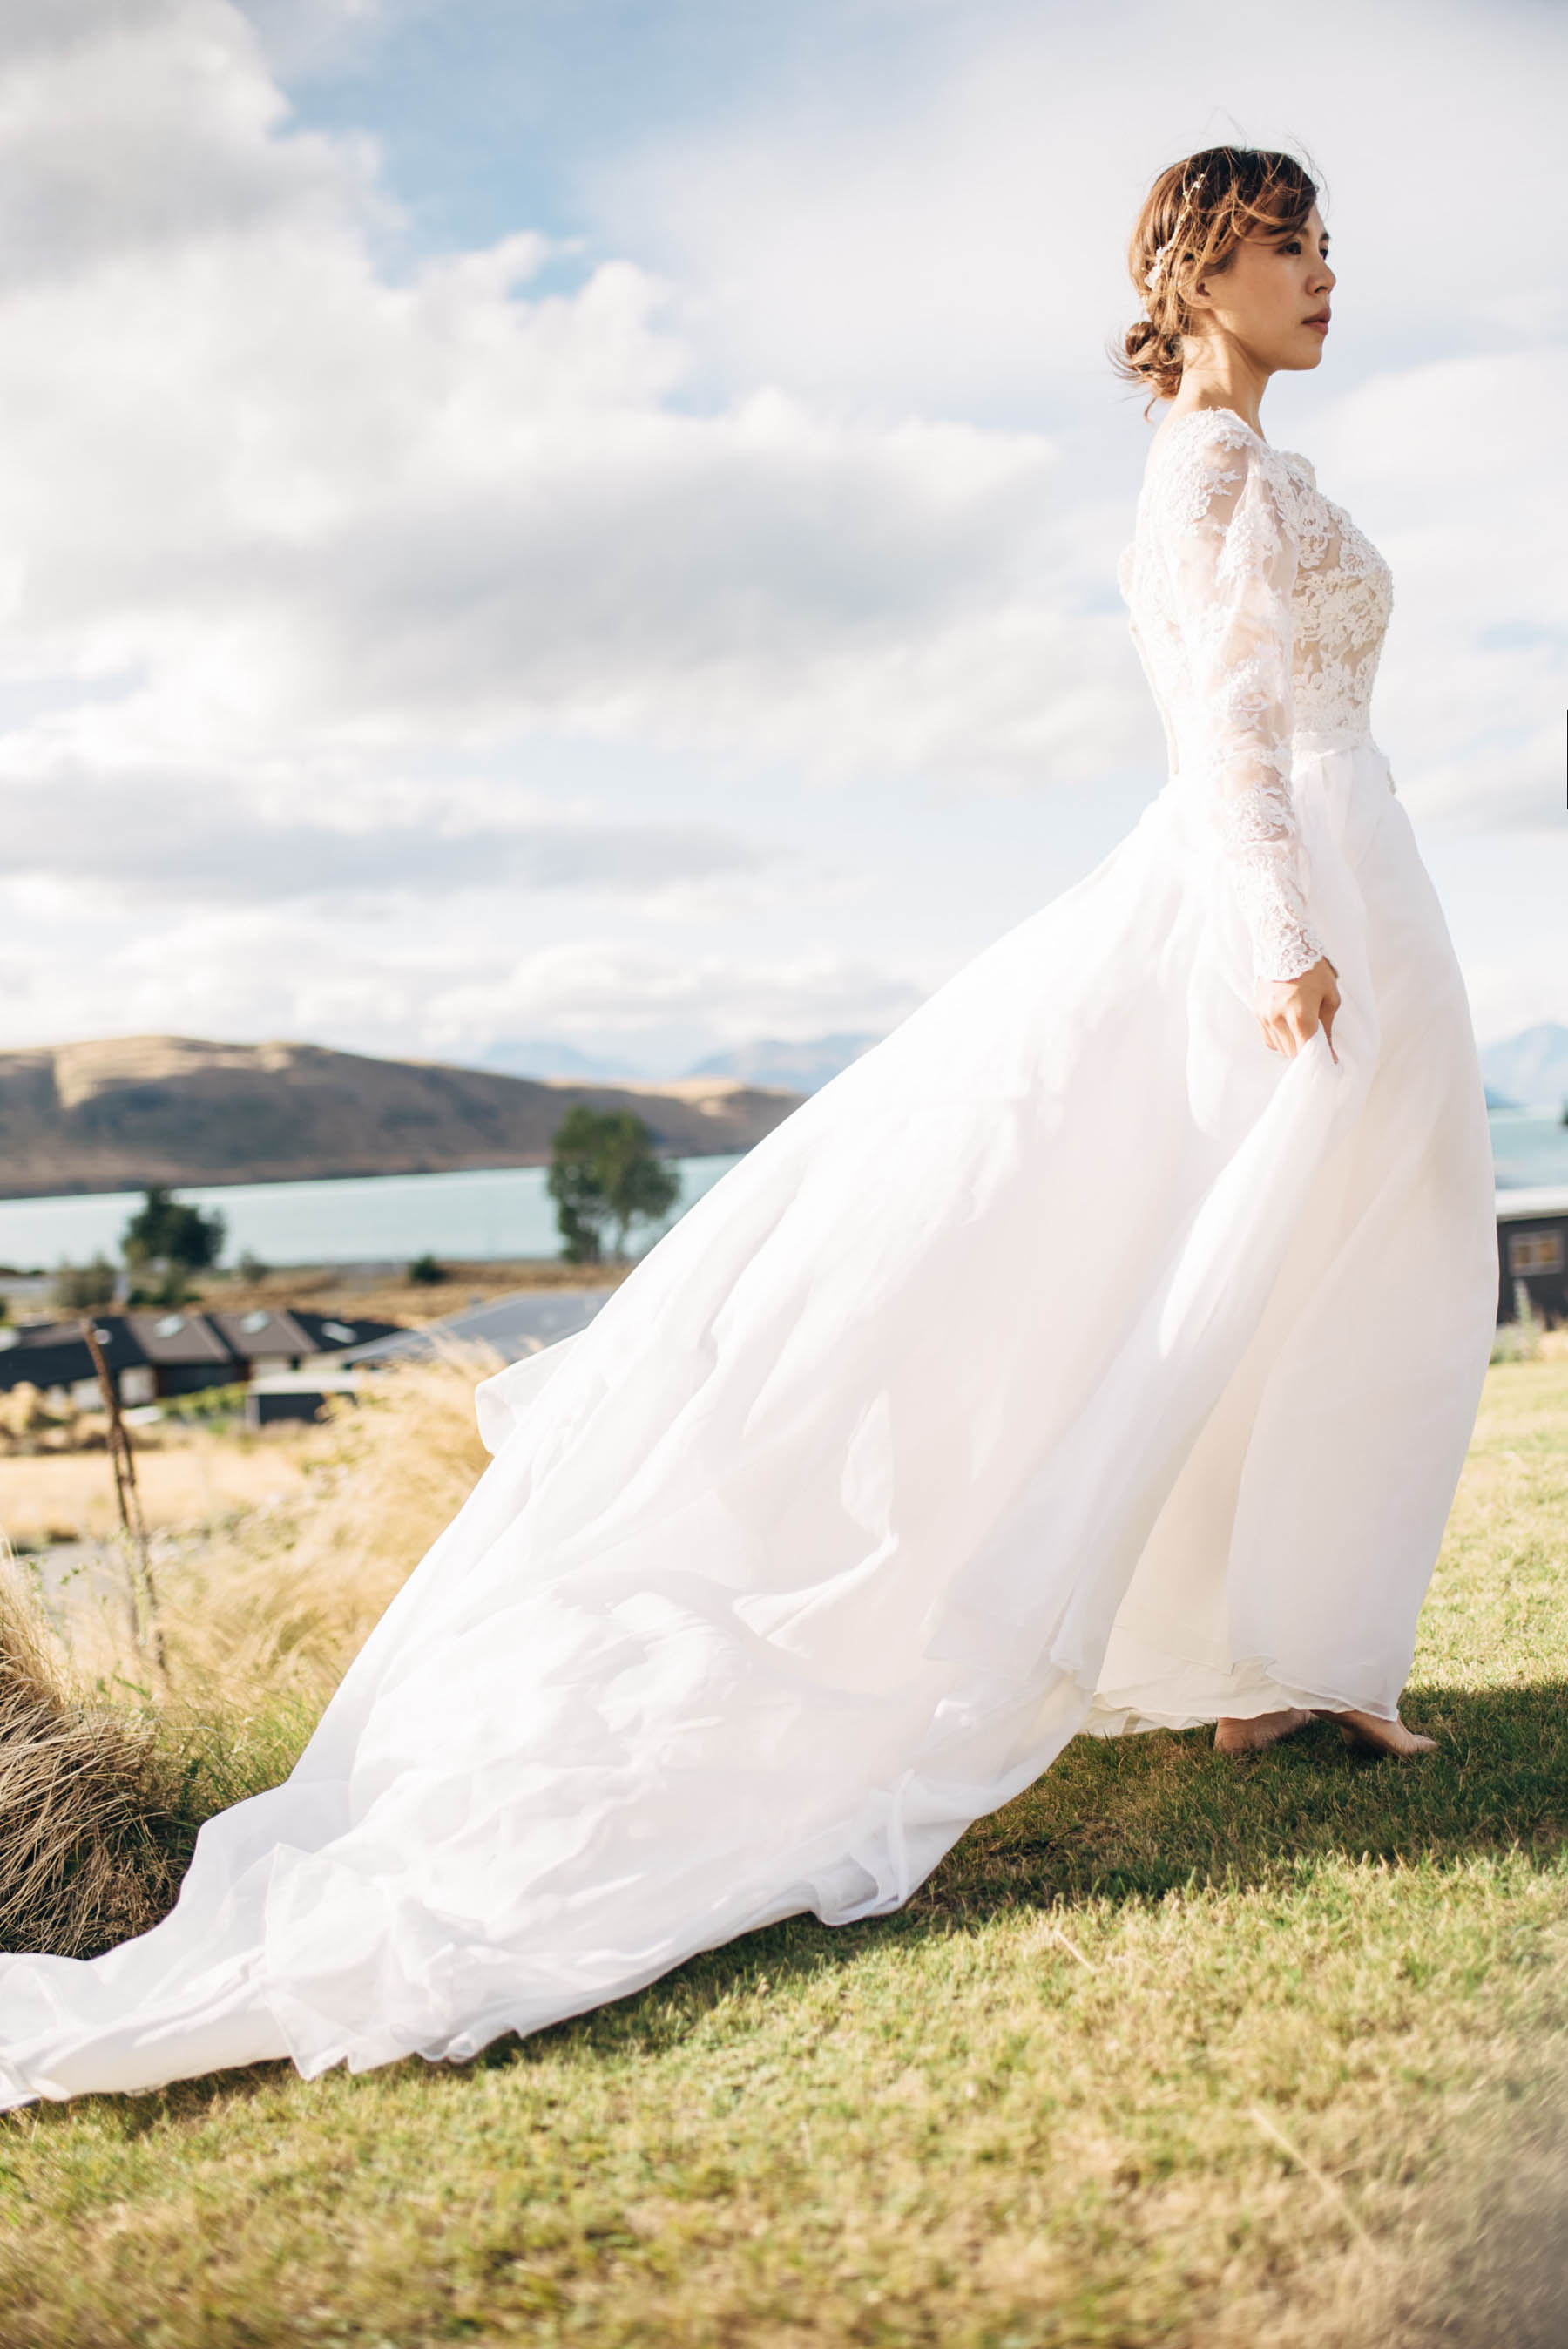 Lake Tekapo 紐西蘭 海外婚紗 Jill Loves Lace 蒂卡波湖 婚紗